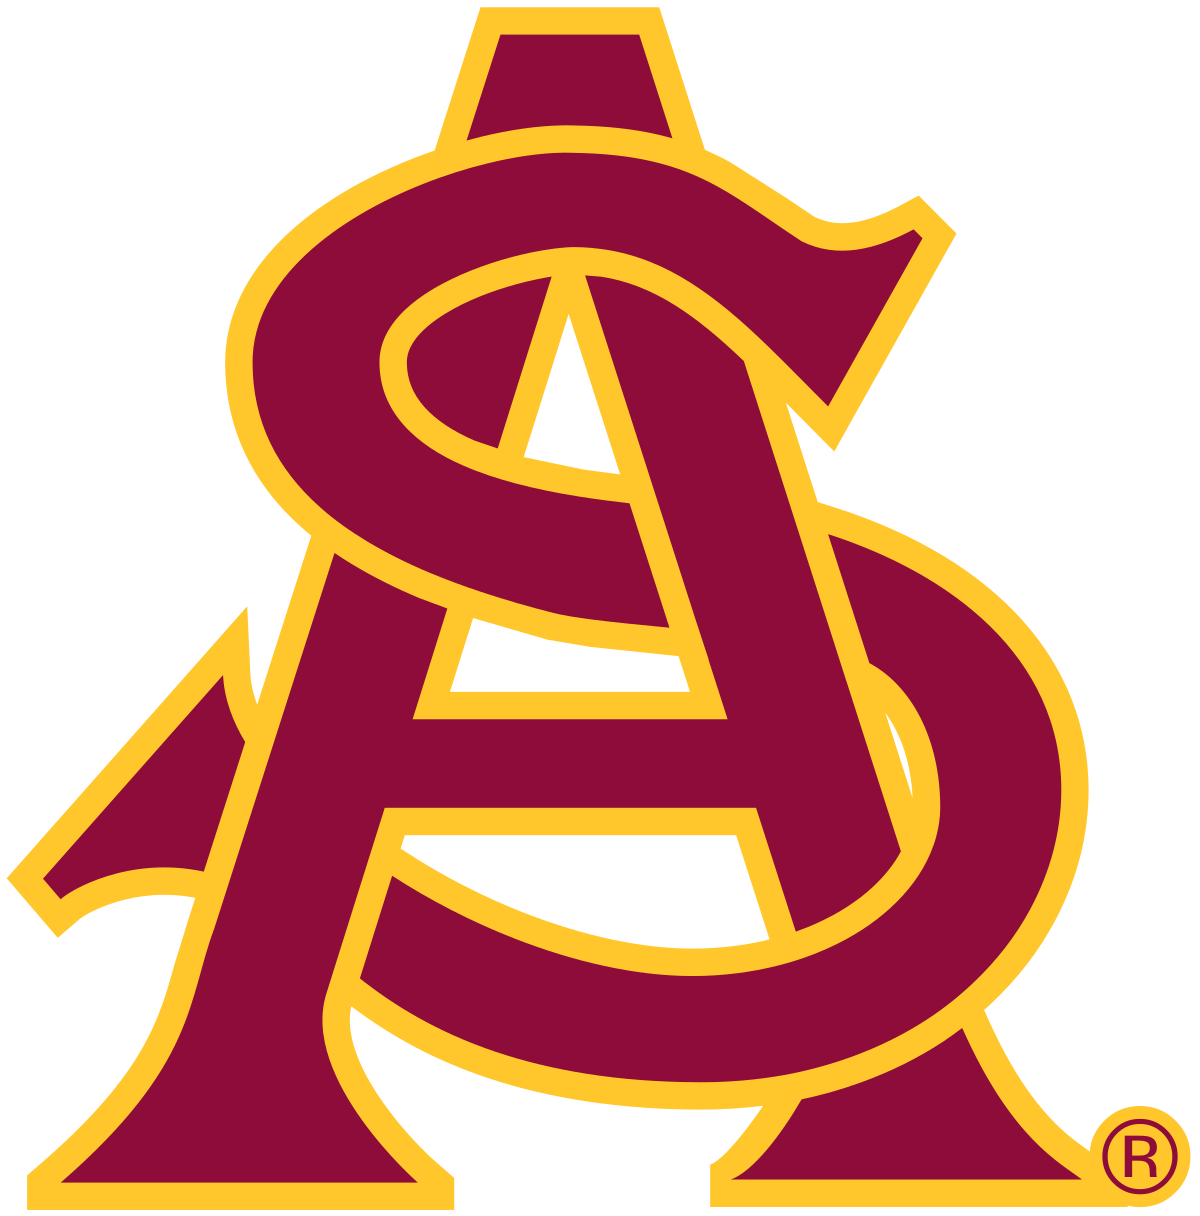 Asu Football Logo - 2004 Arizona State Sun Devils football team